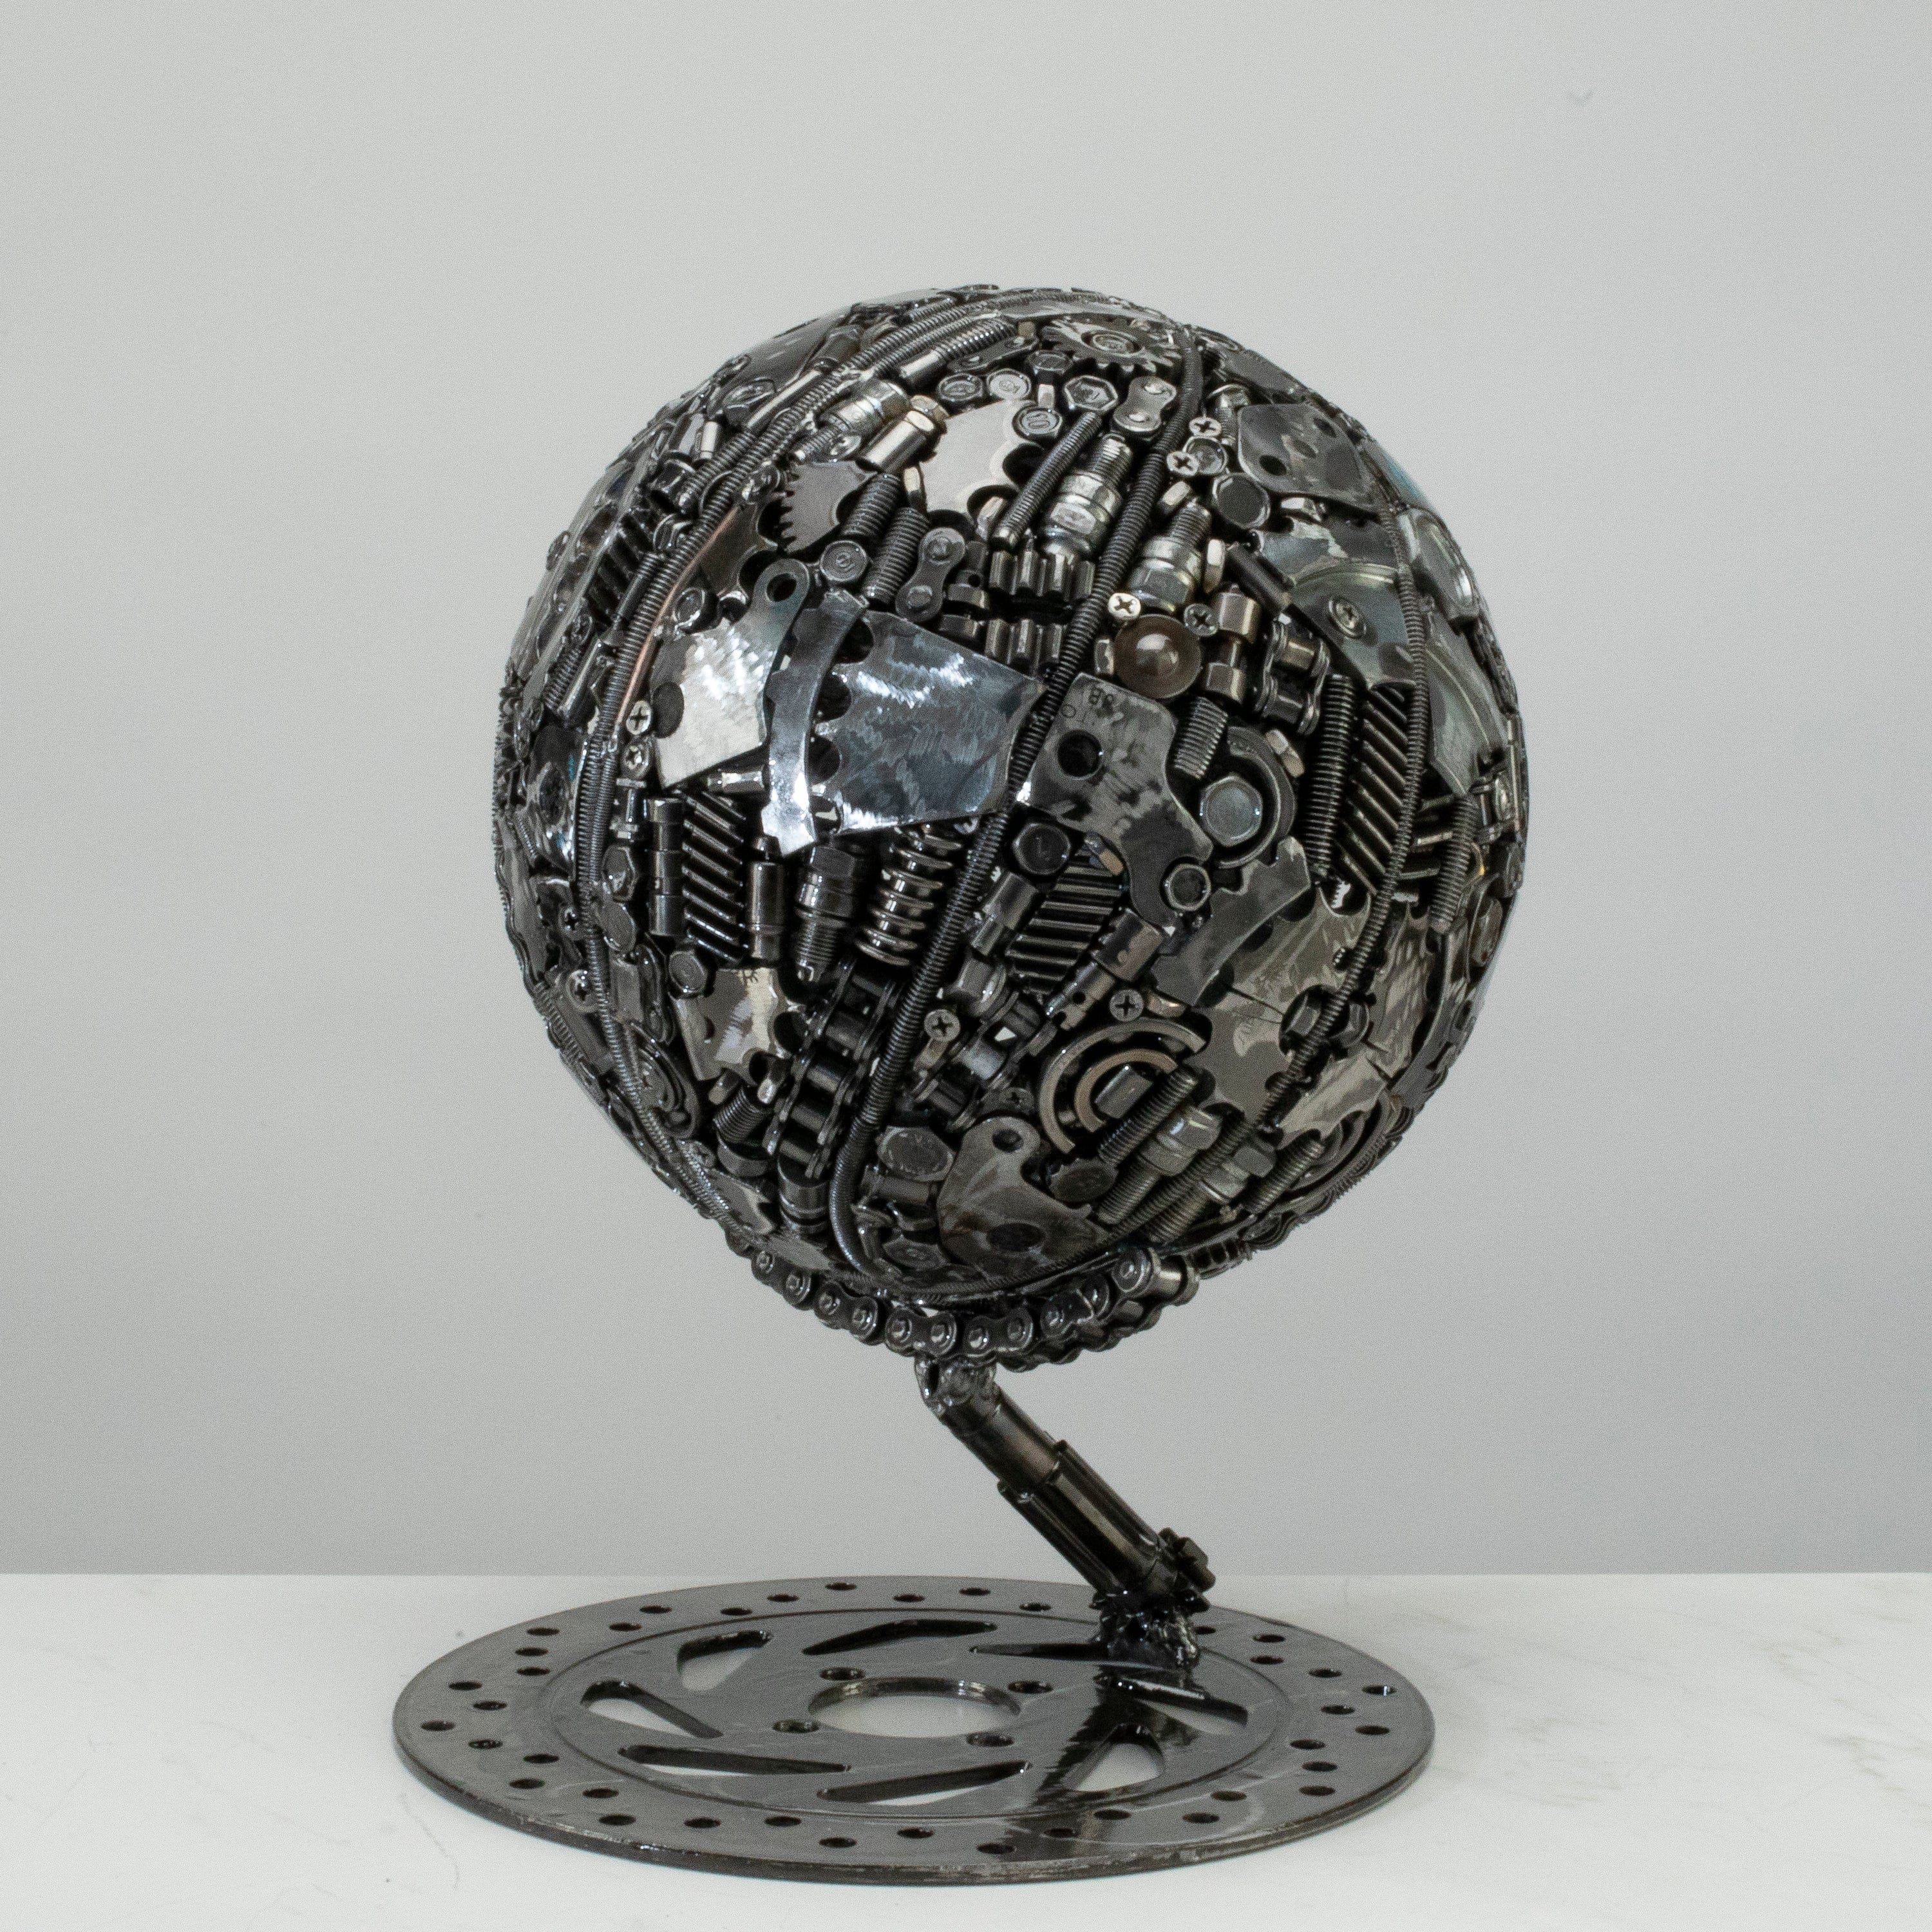 KALIFANO Recycled Metal Art 29.5" Basketball Recycled Metal Art Sculpture RMS-BBALL75-PK